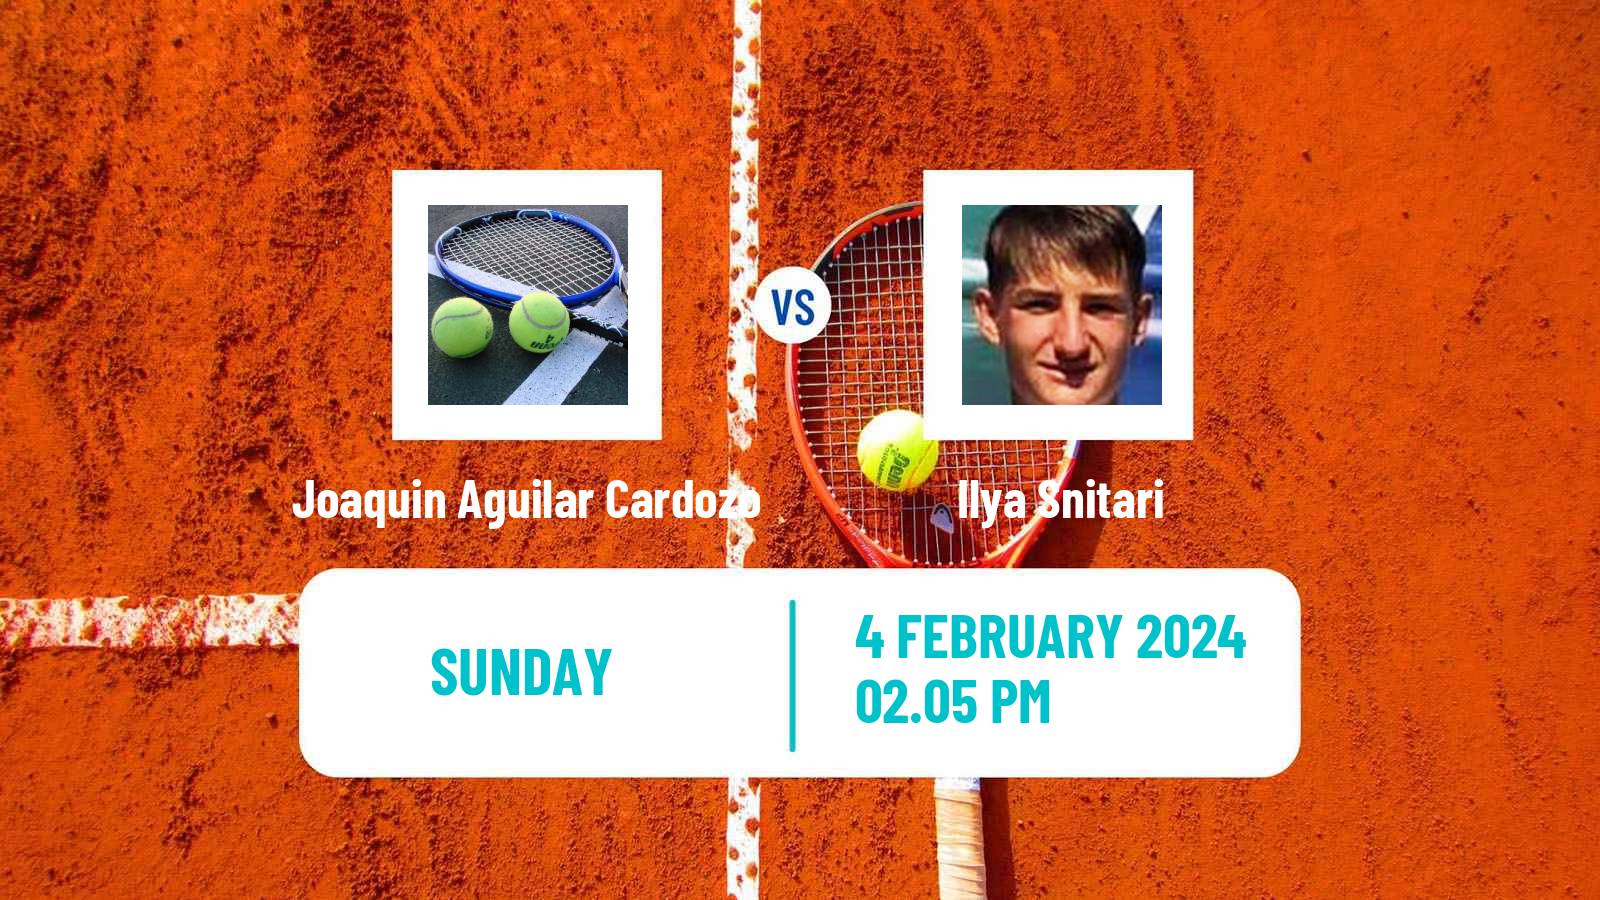 Tennis Davis Cup World Group II Joaquin Aguilar Cardozo - Ilya Snitari